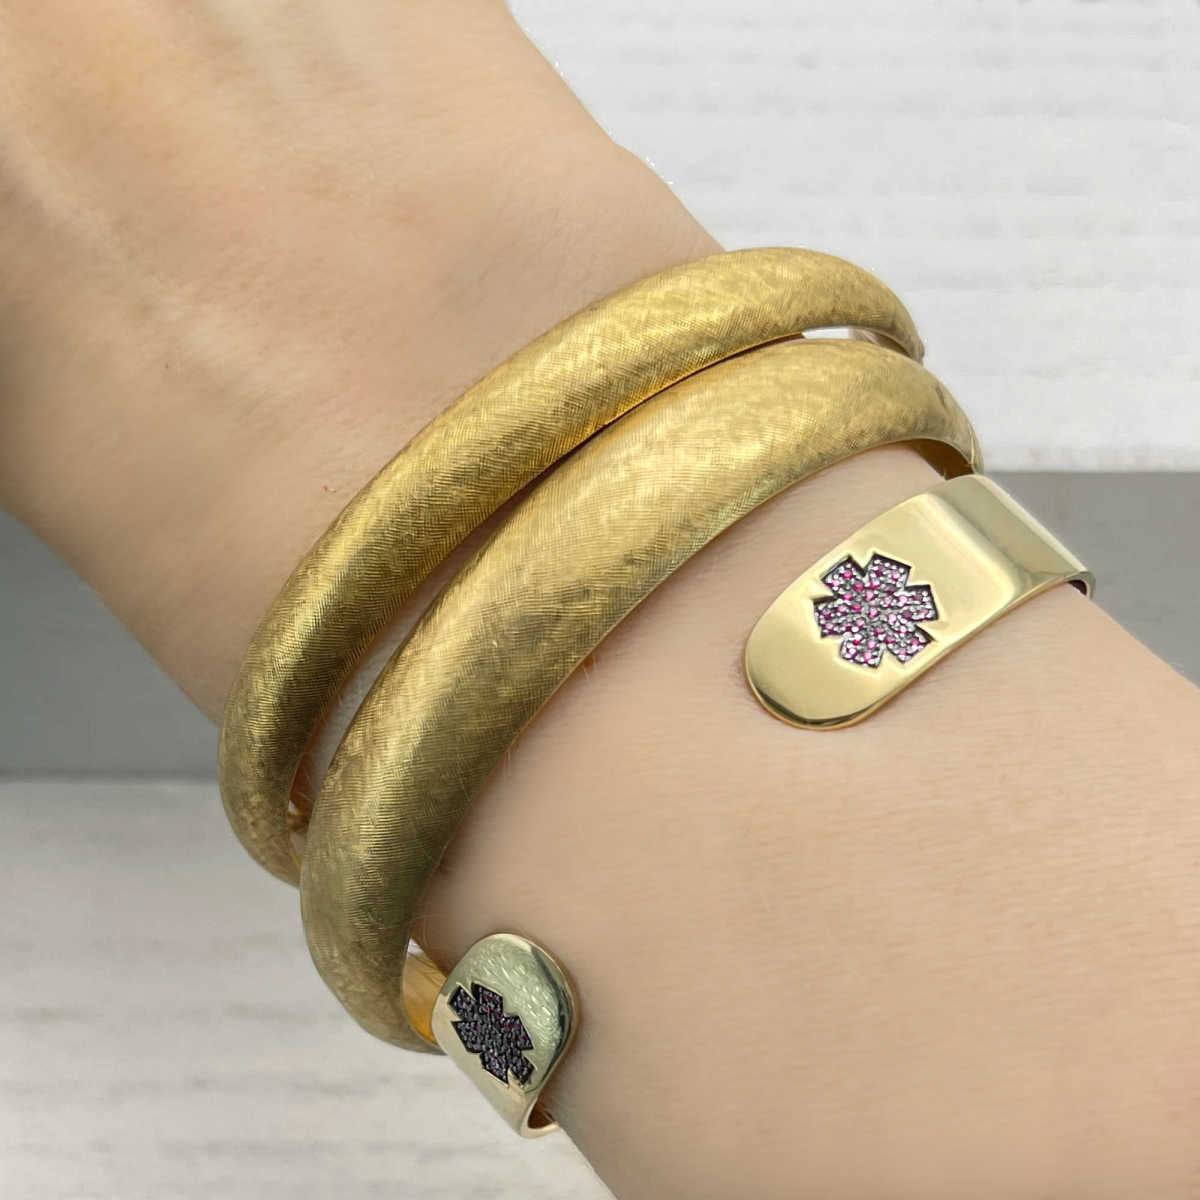 medic alert ID cuff bracelet for women on model | 14k yellow gold ruby | Charmed Medical Jewelry